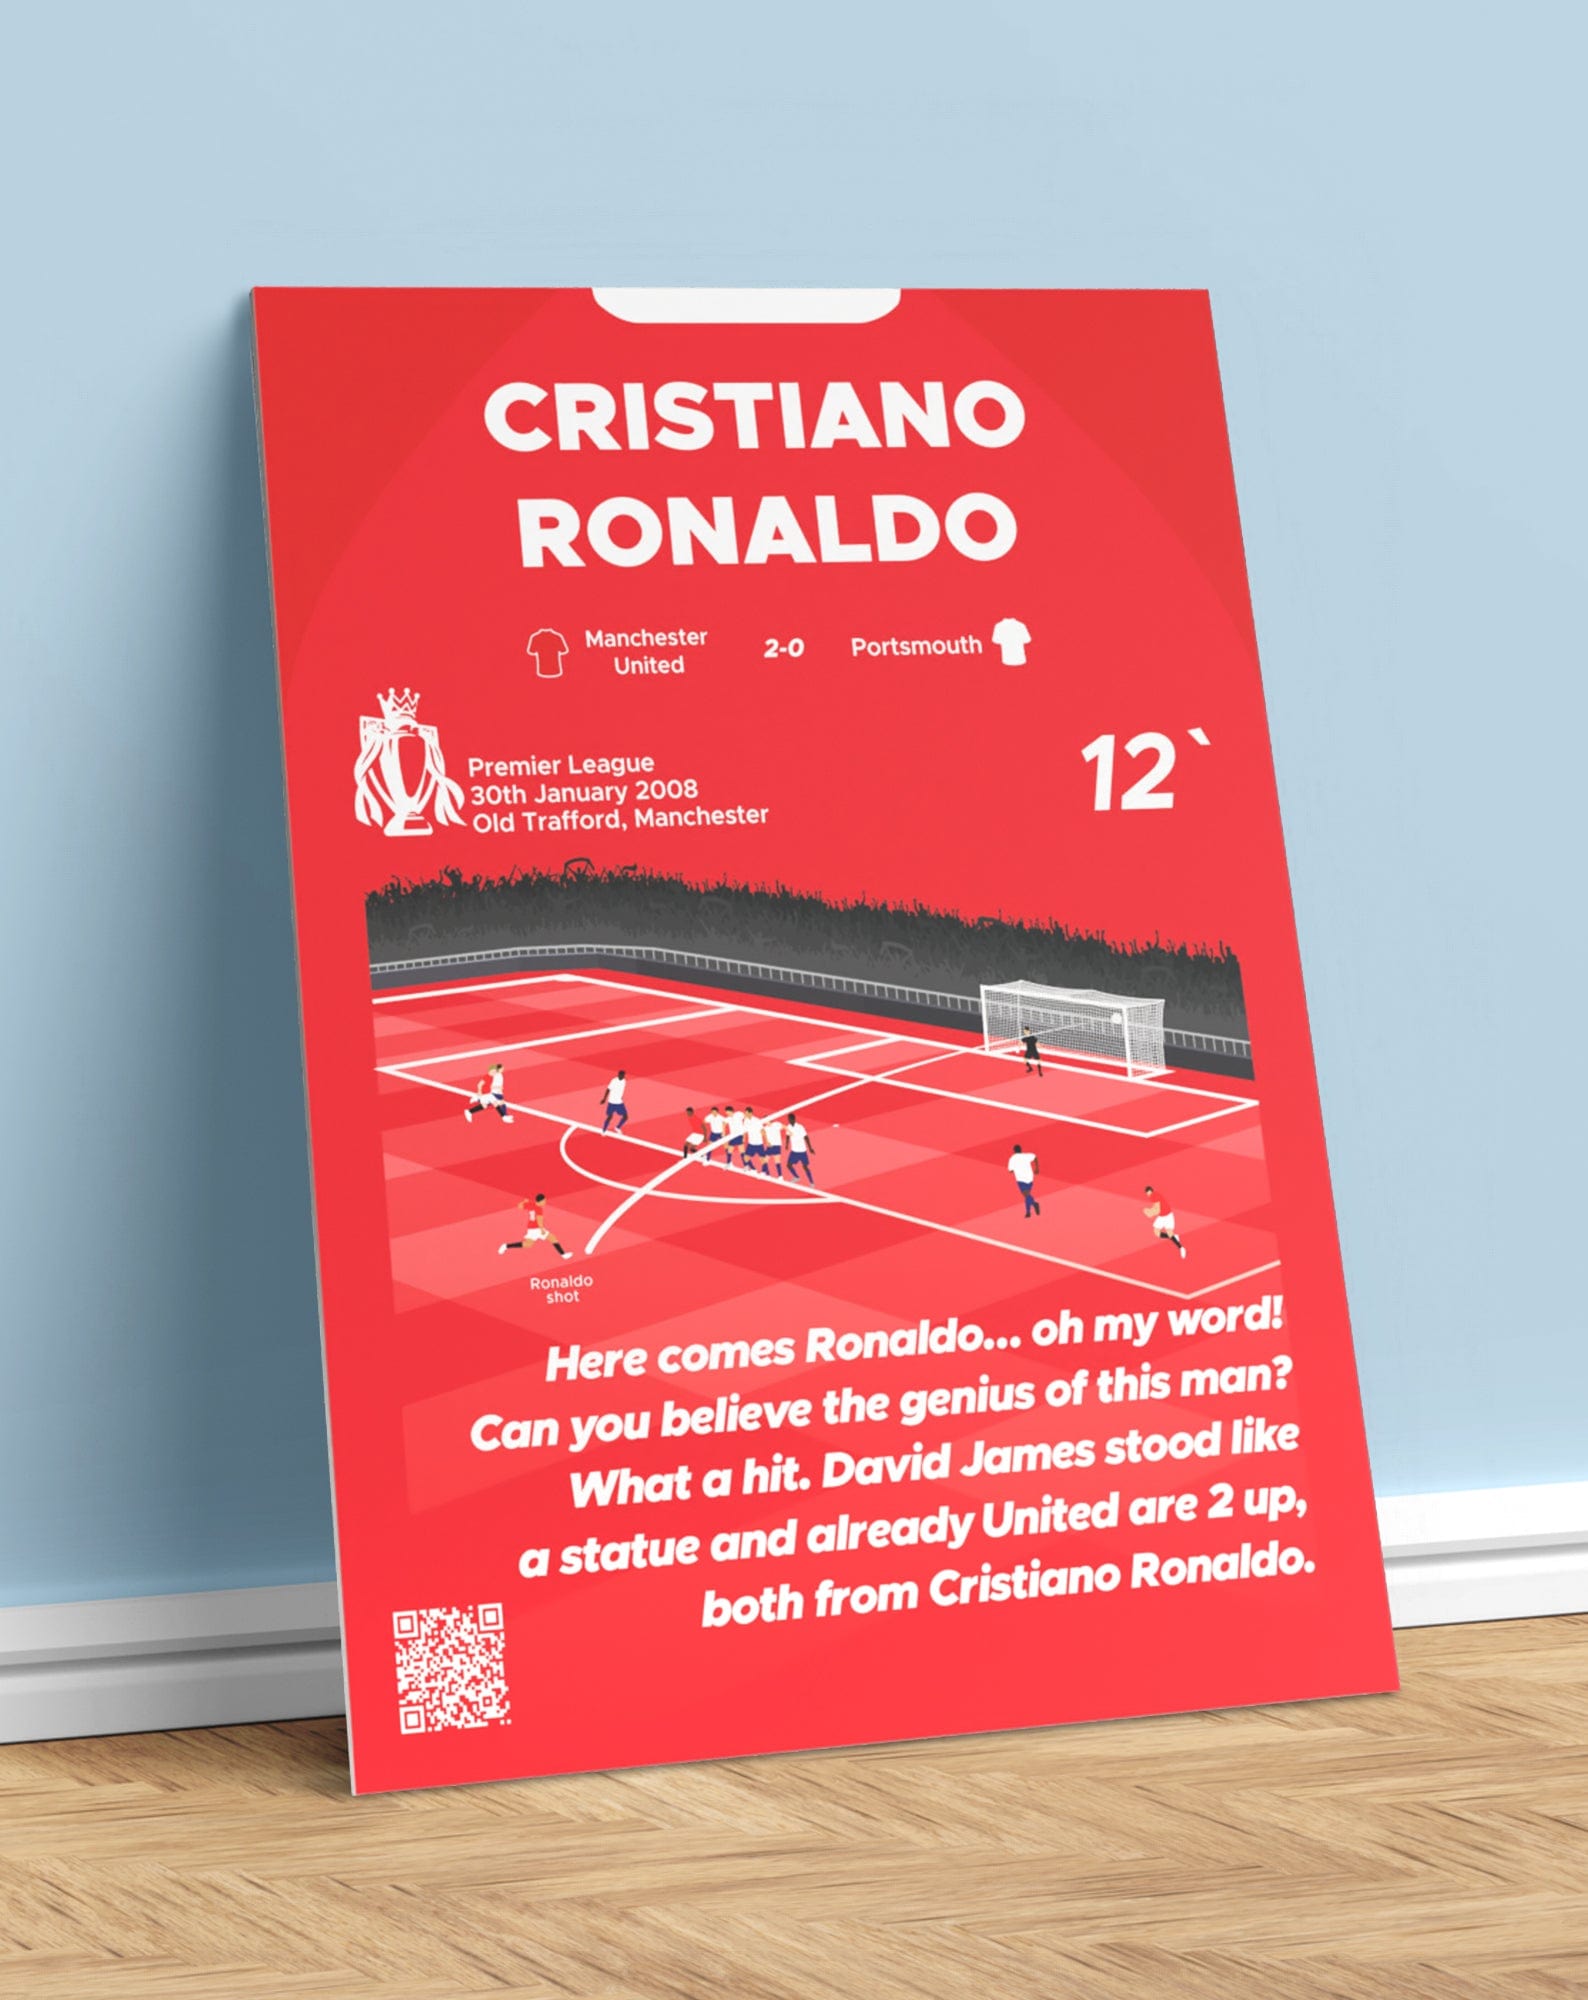 Cristiano Ronaldo Free Kick Goal vs Portsmouth (07/08) | CardsPlug